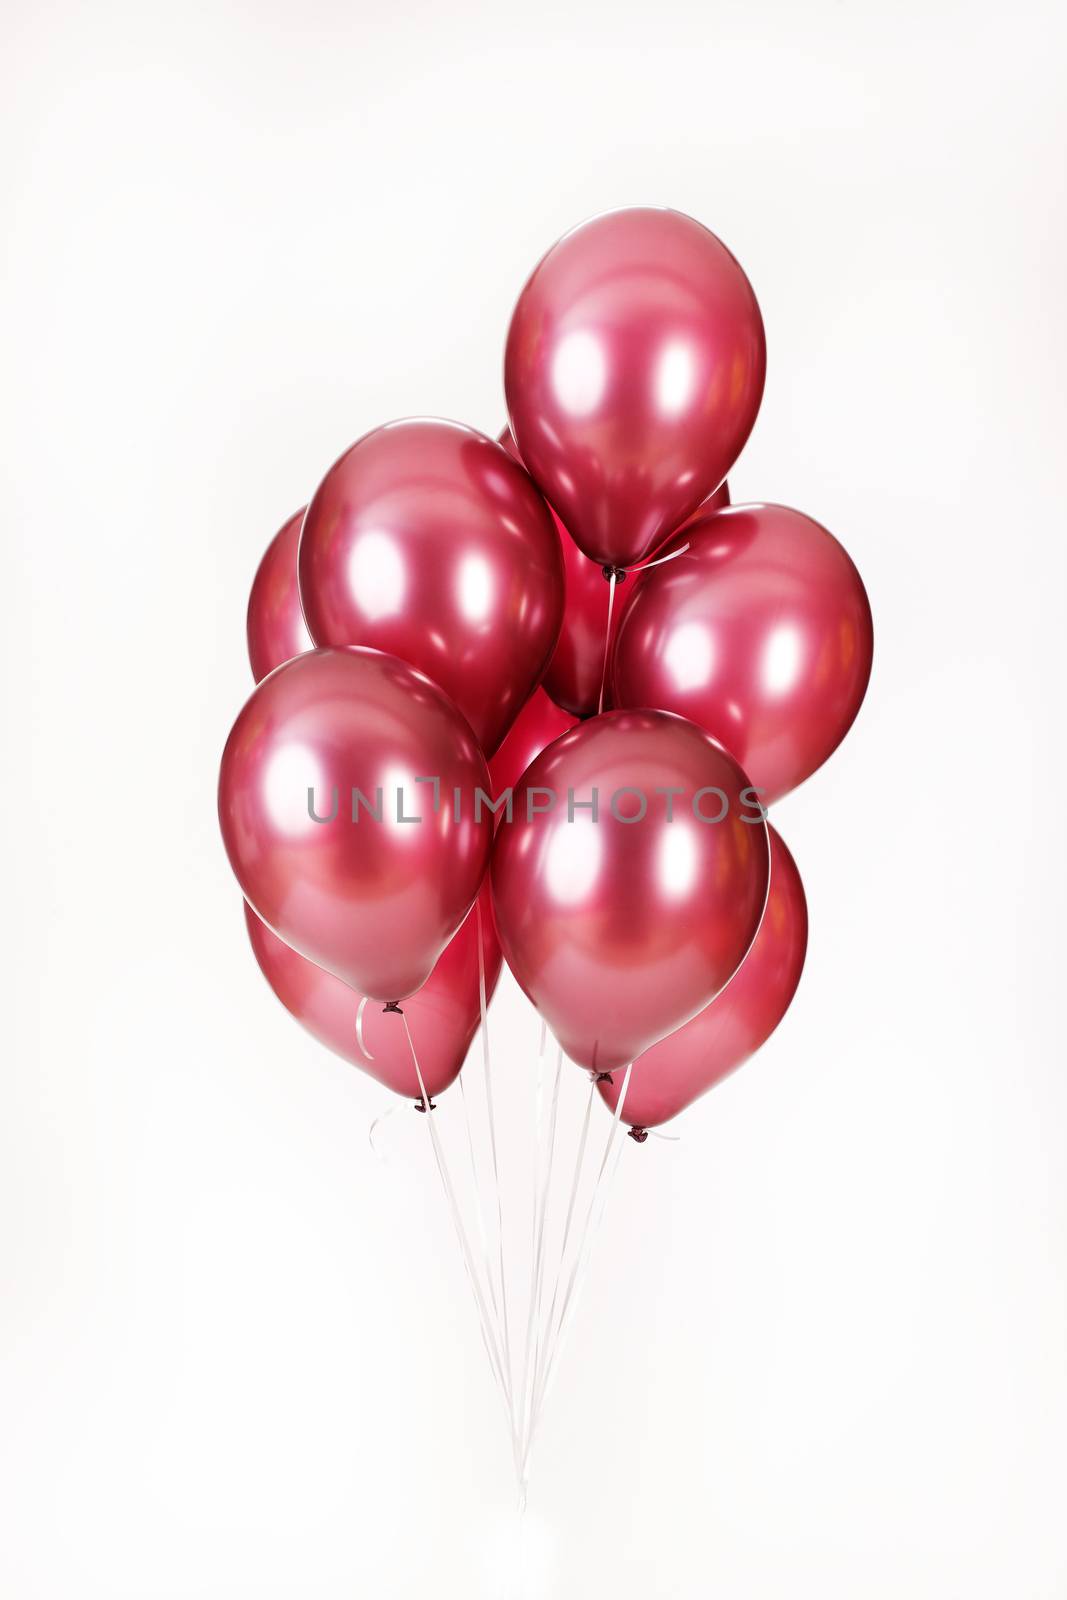 Colour Balloons by Fotoskat